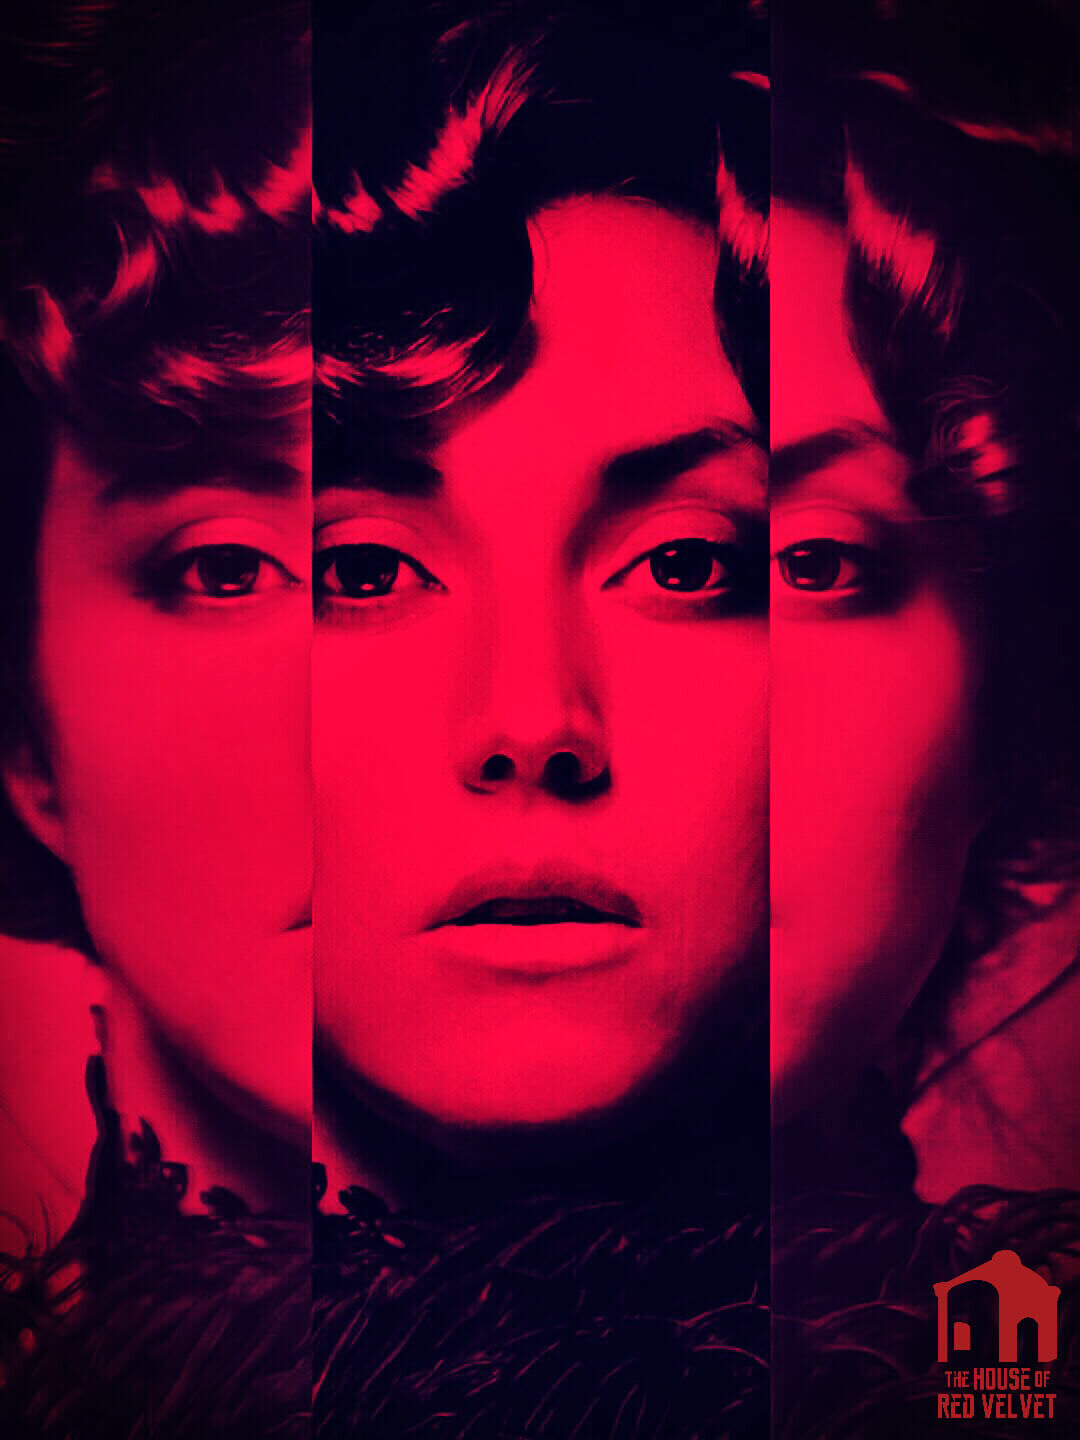 The House of Red Velvet. Three faces dimension artwork.